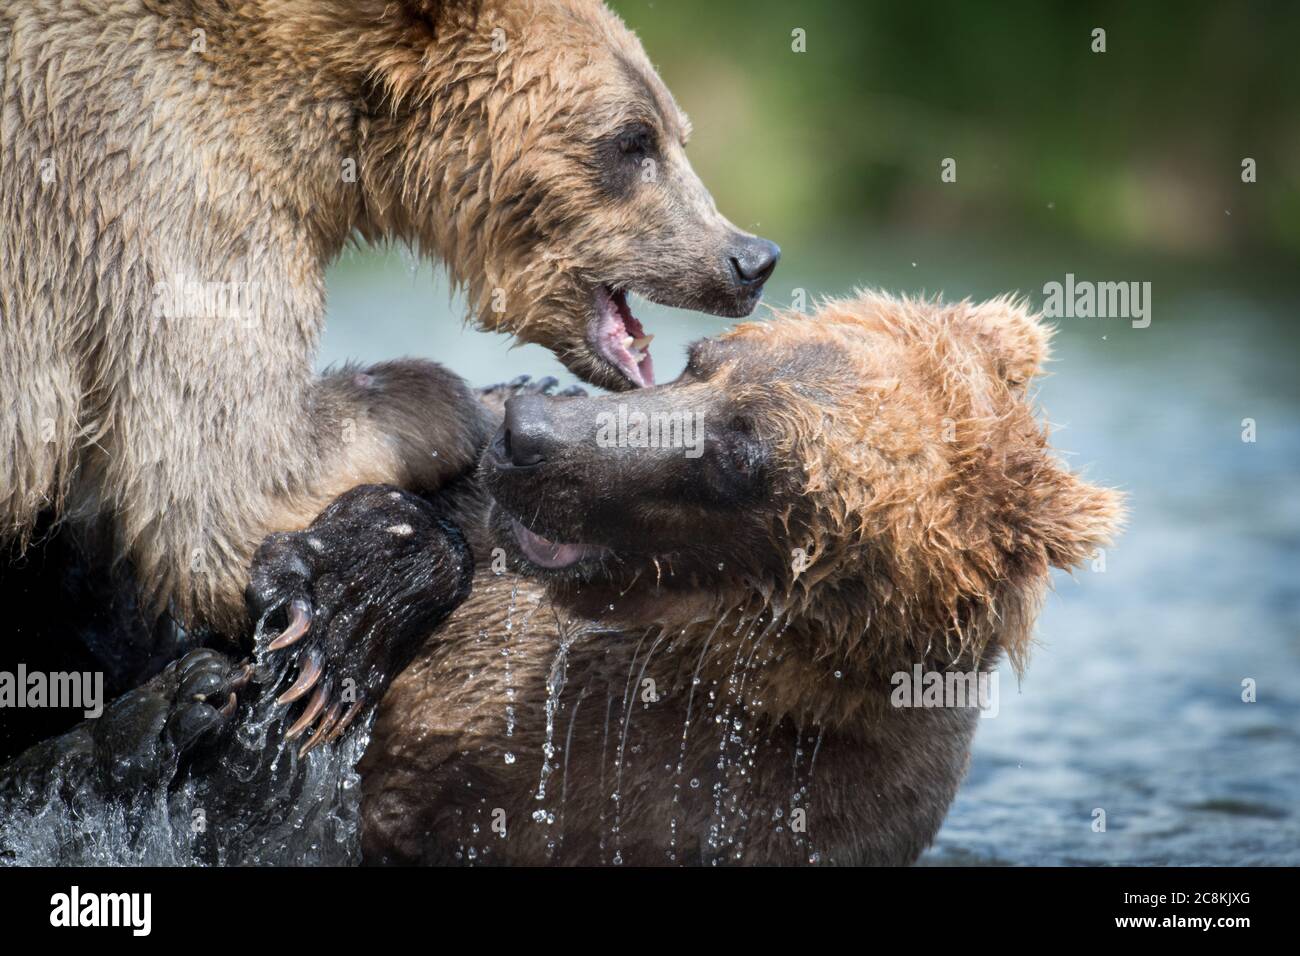 An Alaskan brown bear bites the ear of another bear while fighting in Katmai National Park, Alaska Stock Photo